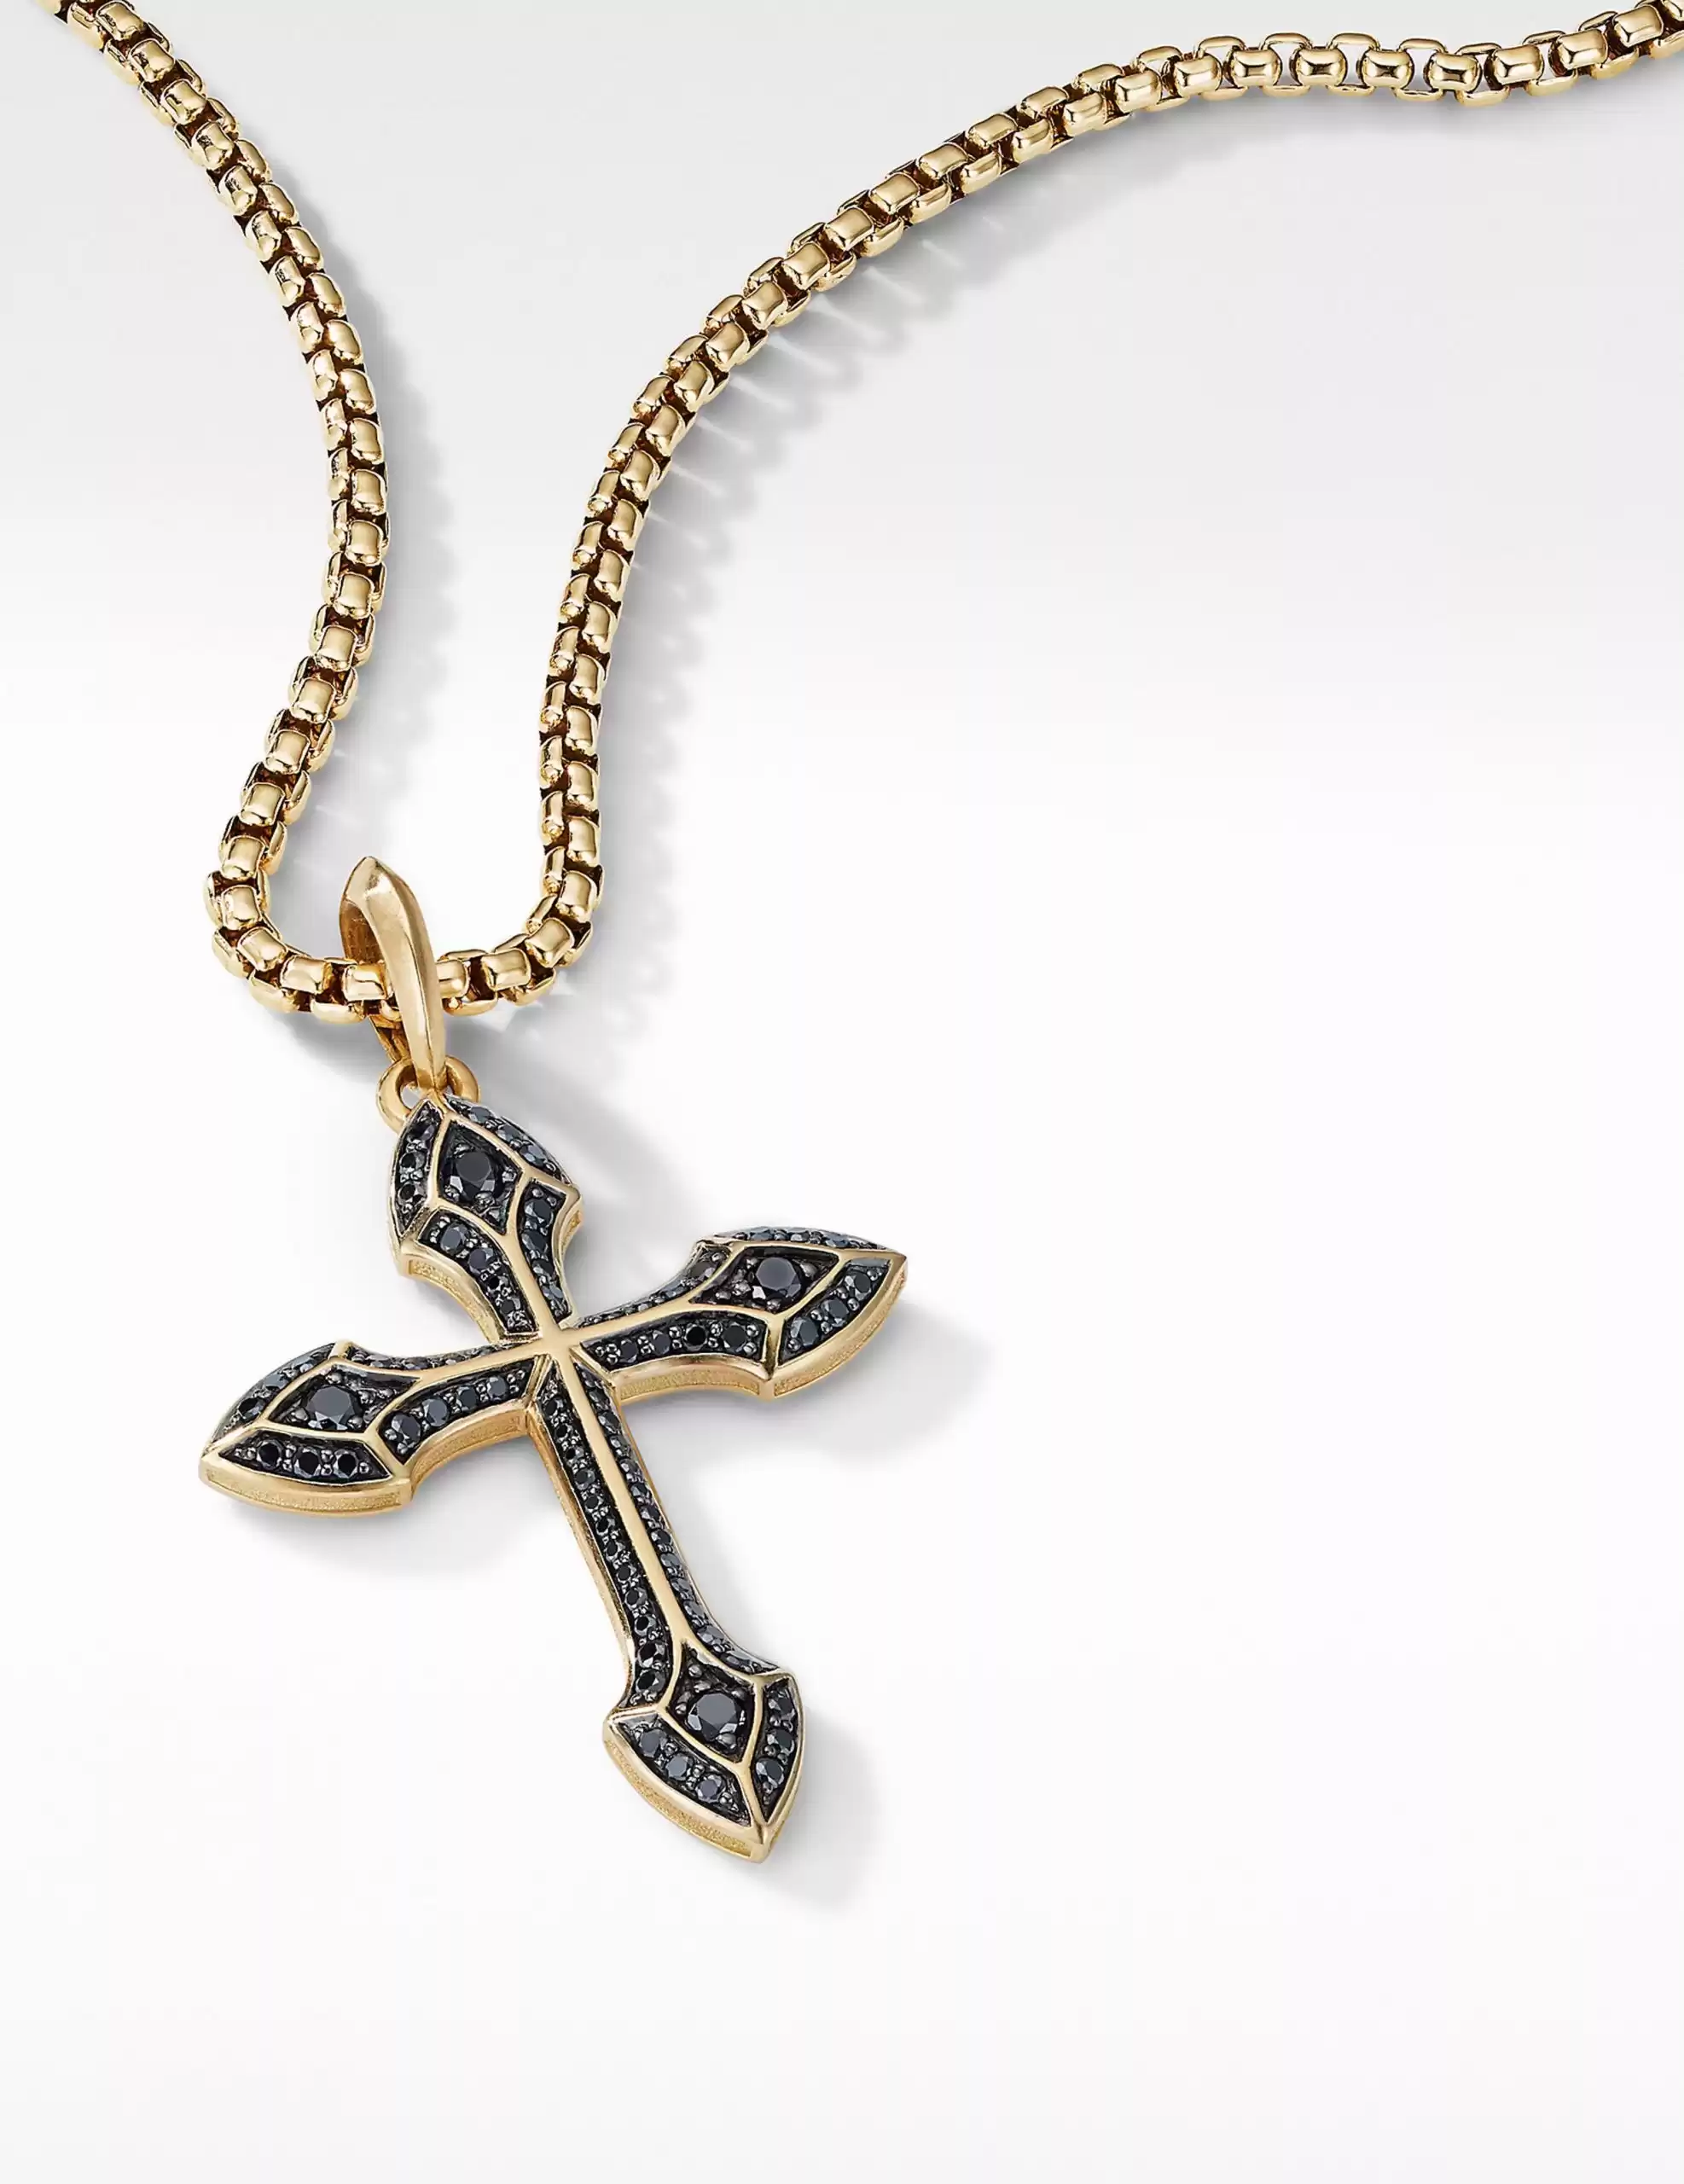 David Yurman 18k Gothic Cross Amulet with Pavé Stones